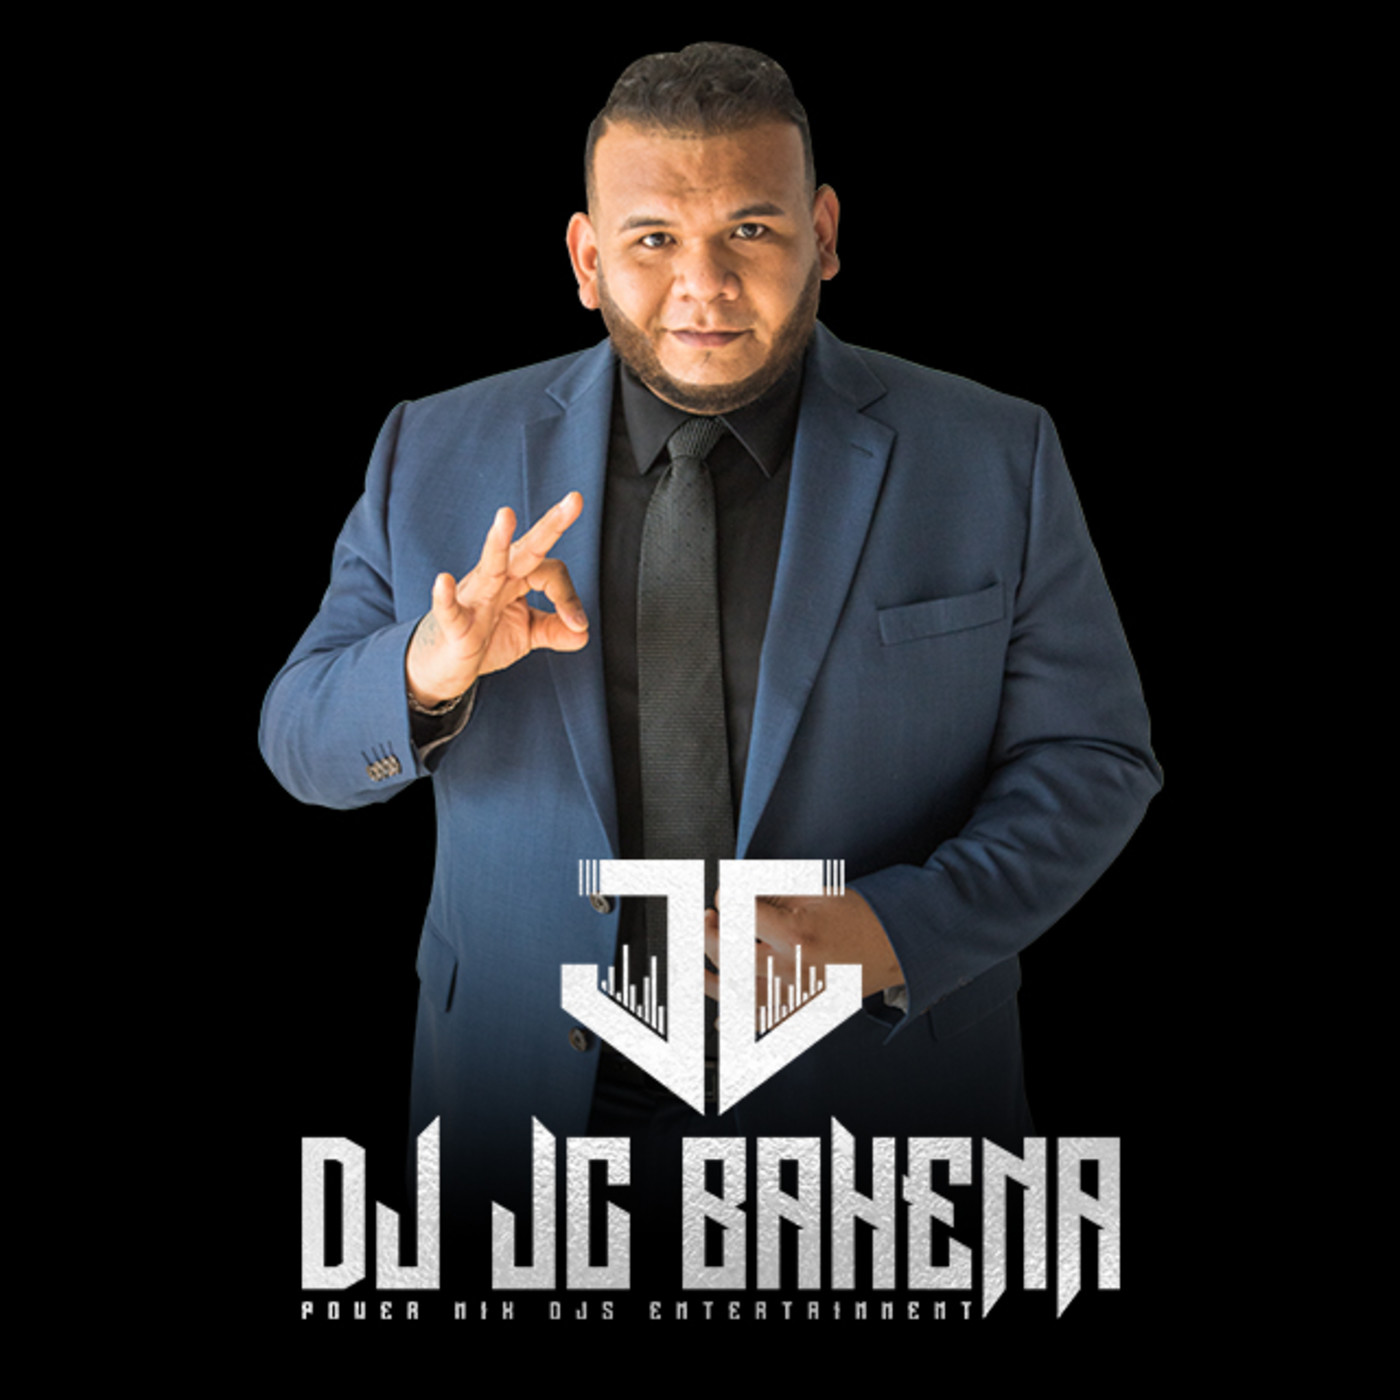 Nortenas MegaMix [Febrero 2020] - DJ JC bahena